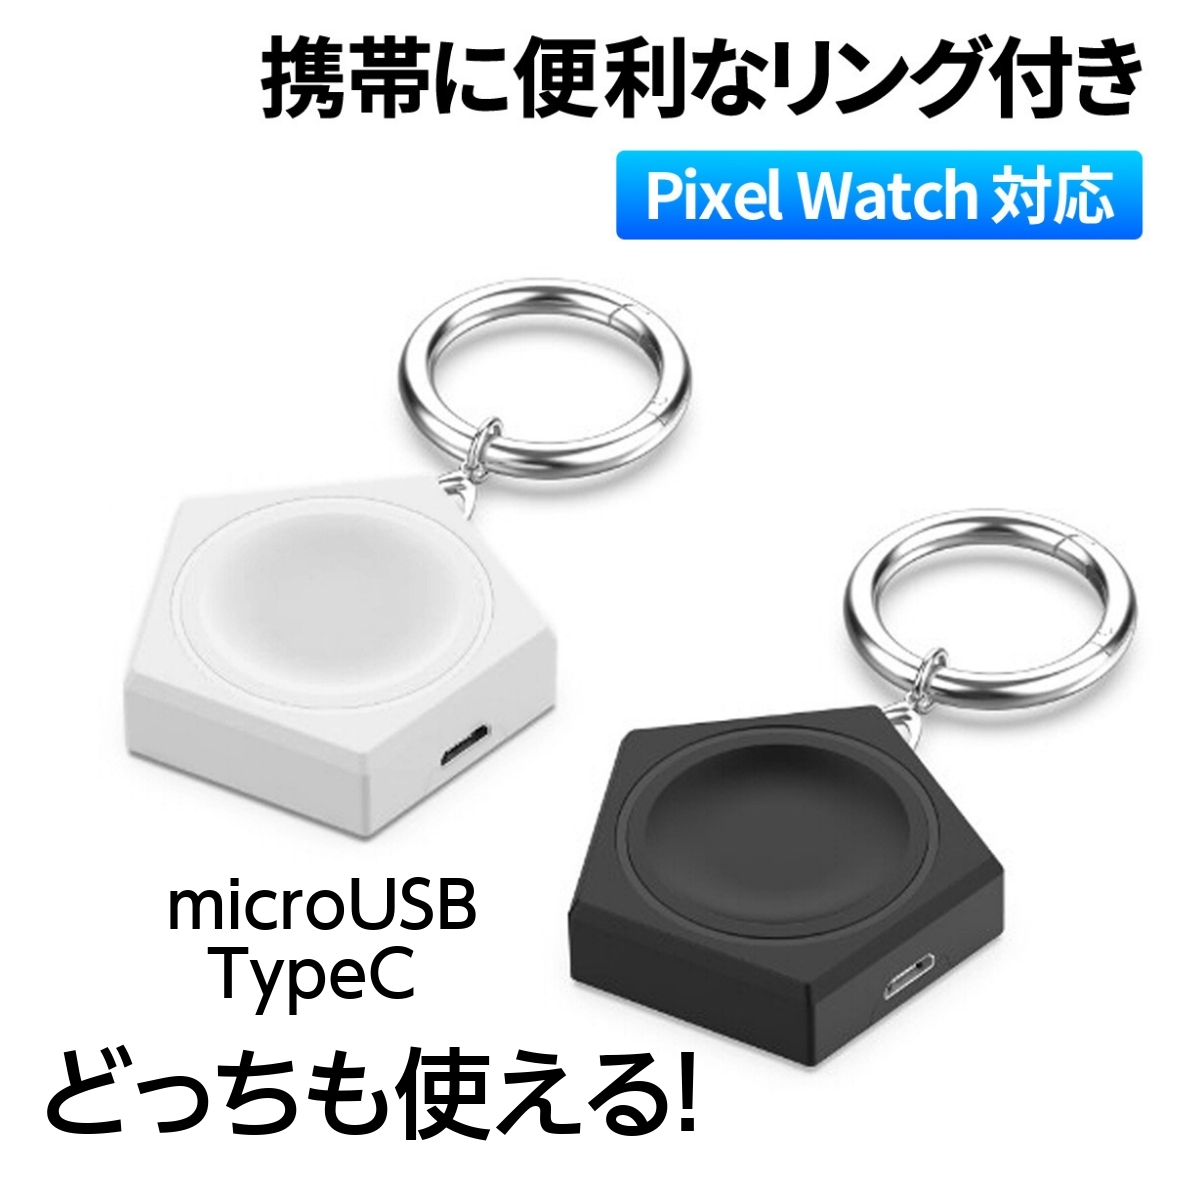 Google Pixel Watch 充電器 ピクセルウォッチ グーグル 2WAY USB Type-C microUSB キーホルダー 携帯 ホワイト 白 新品_画像1